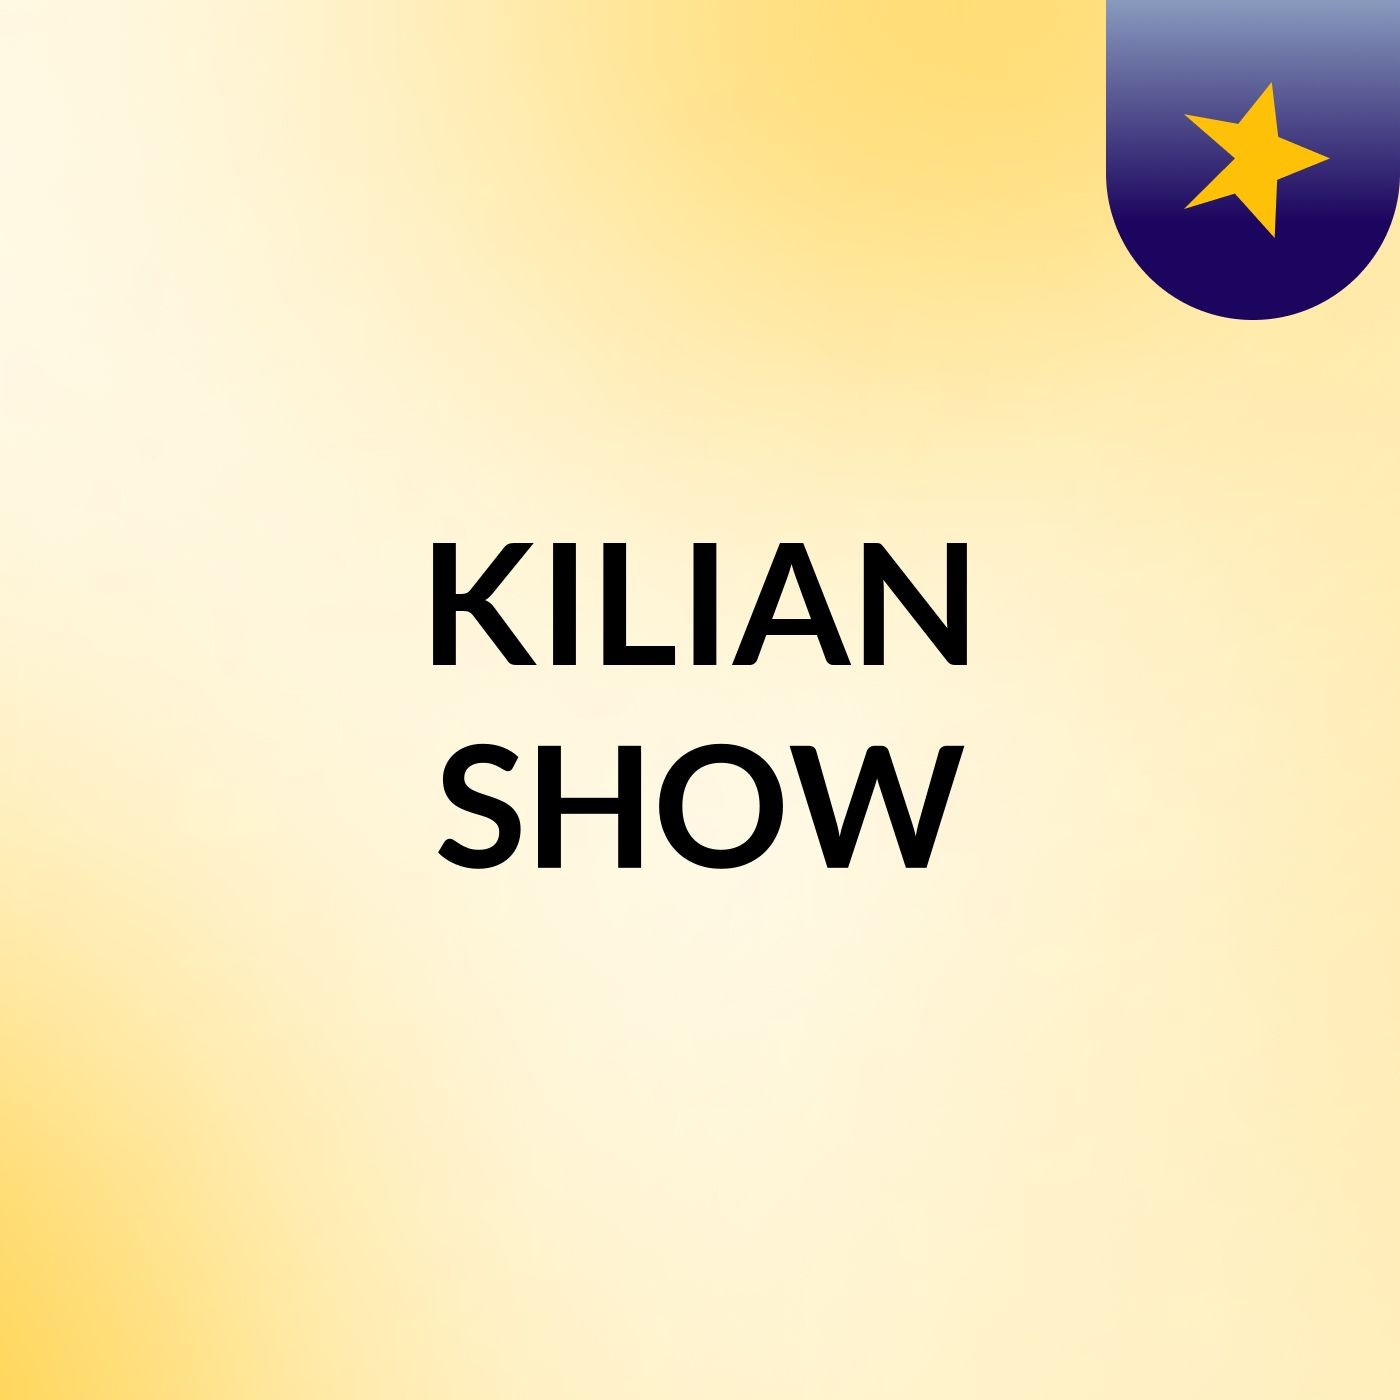 KILIAN SHOW